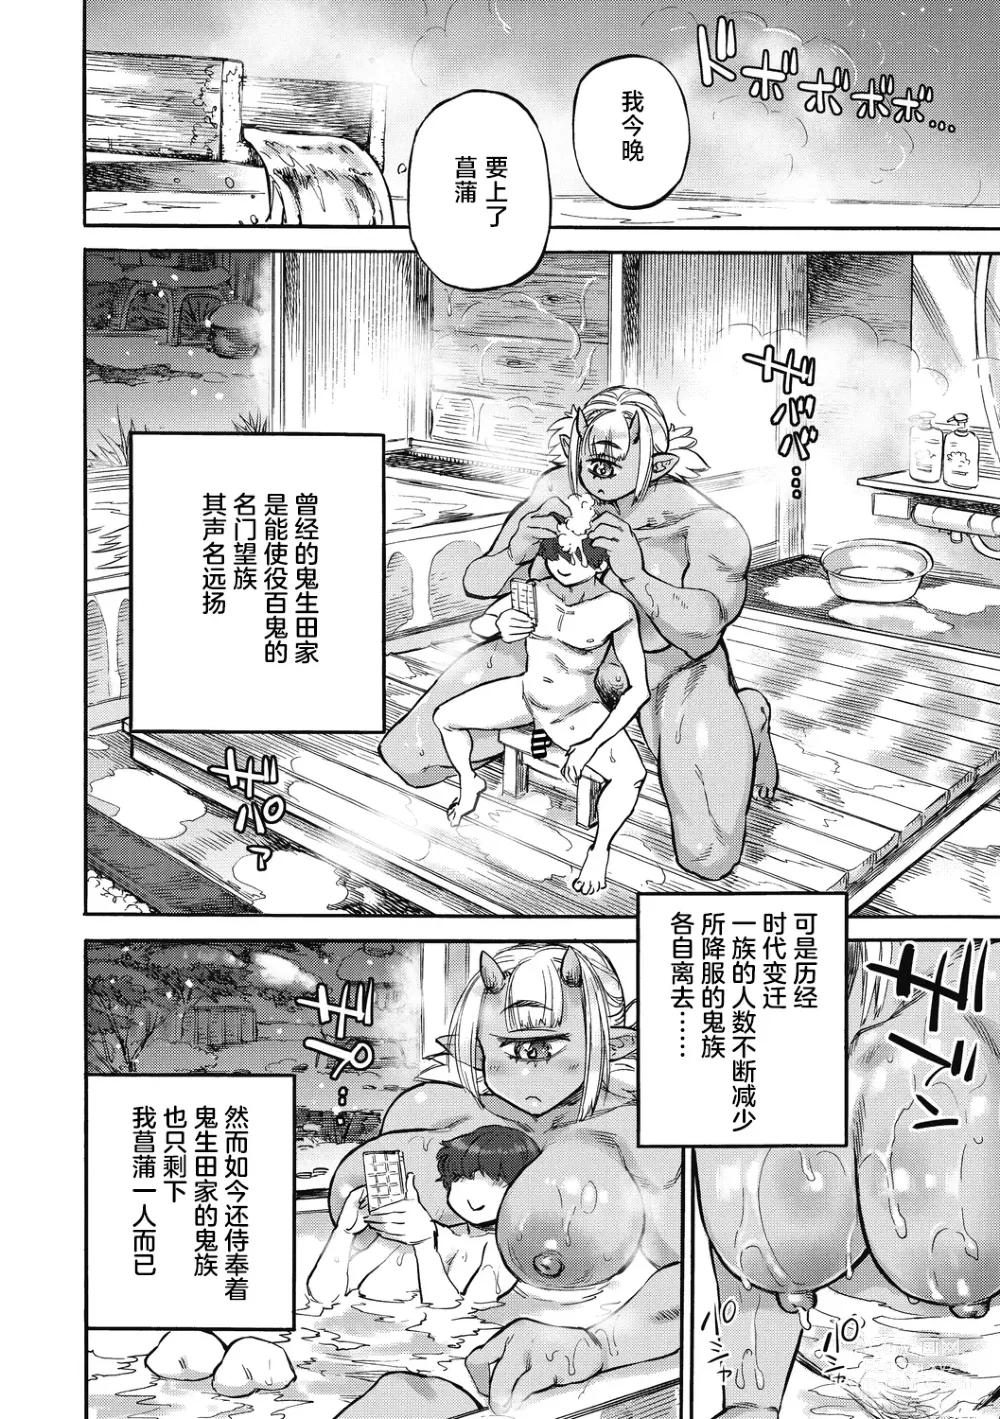 Page 10 of manga Ayame no Noroi